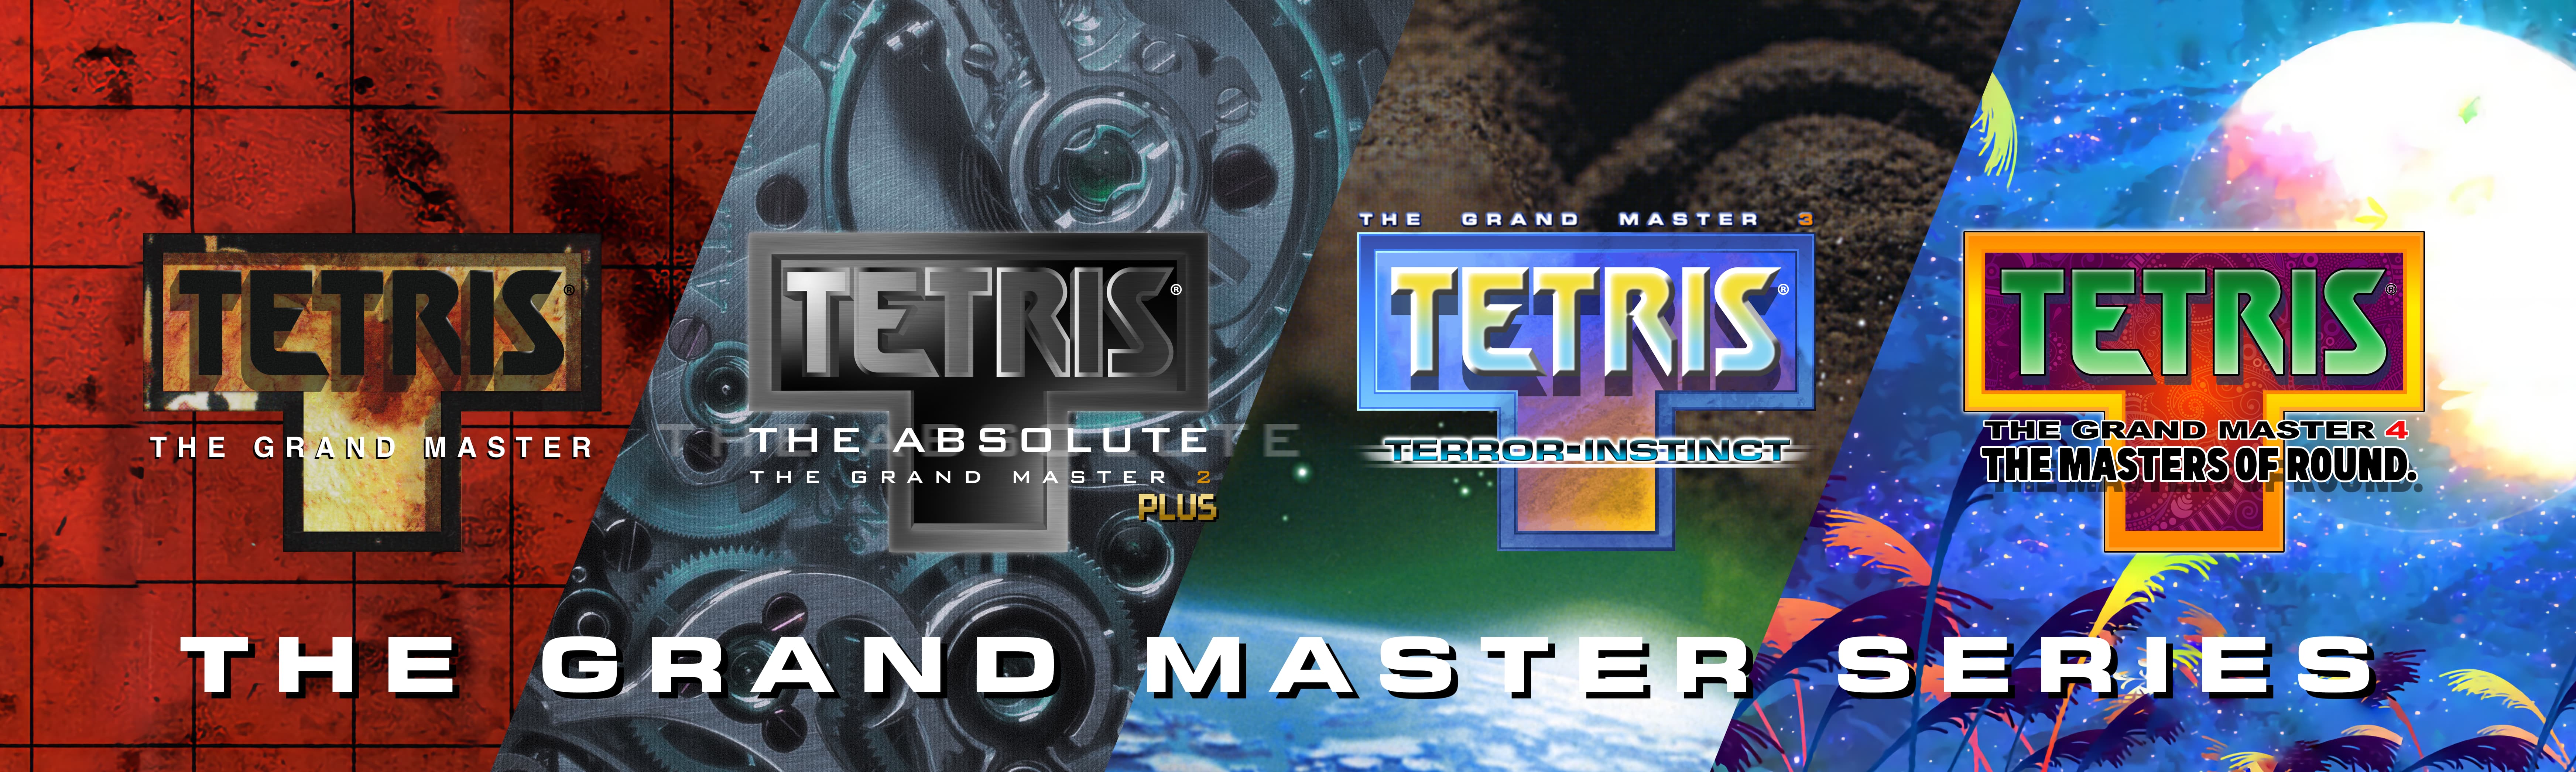 Modernized versions of the Tetris The Grand Master series' logos.